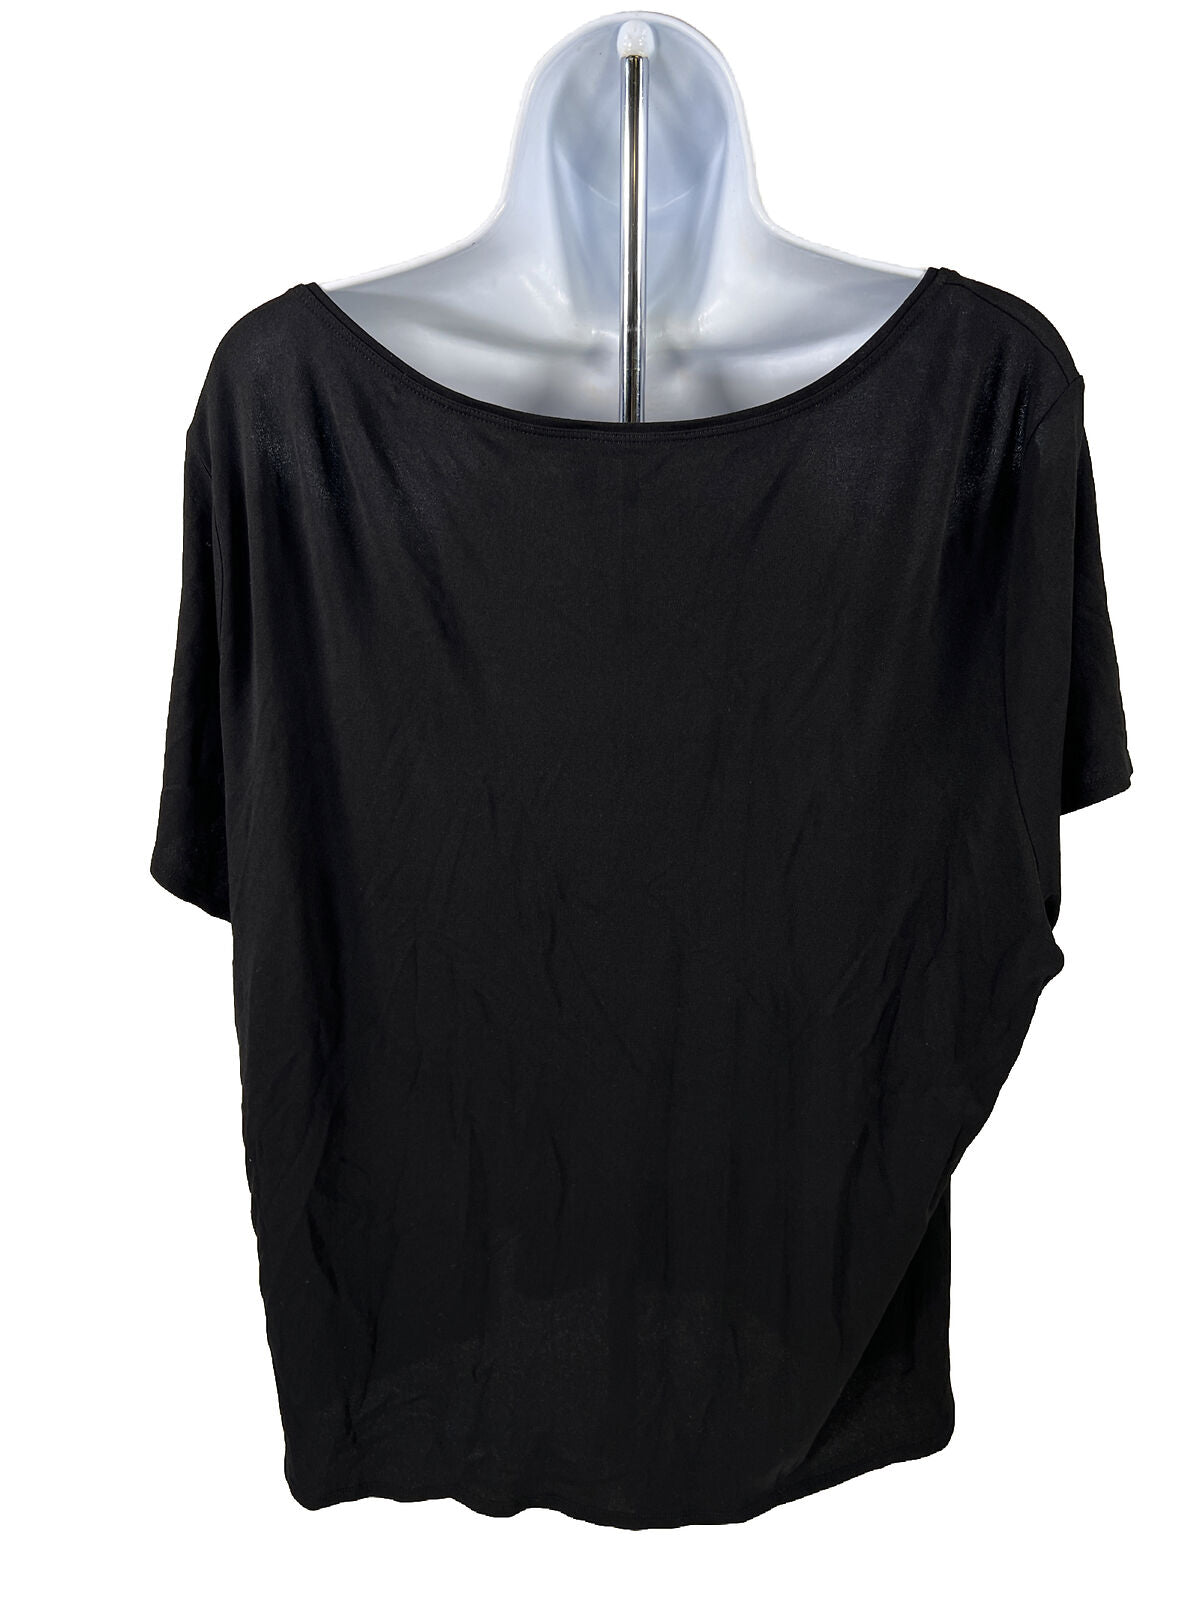 Eileen Fisher Women's Black Short Sleeve Silk T-Shirt - Plus 2X